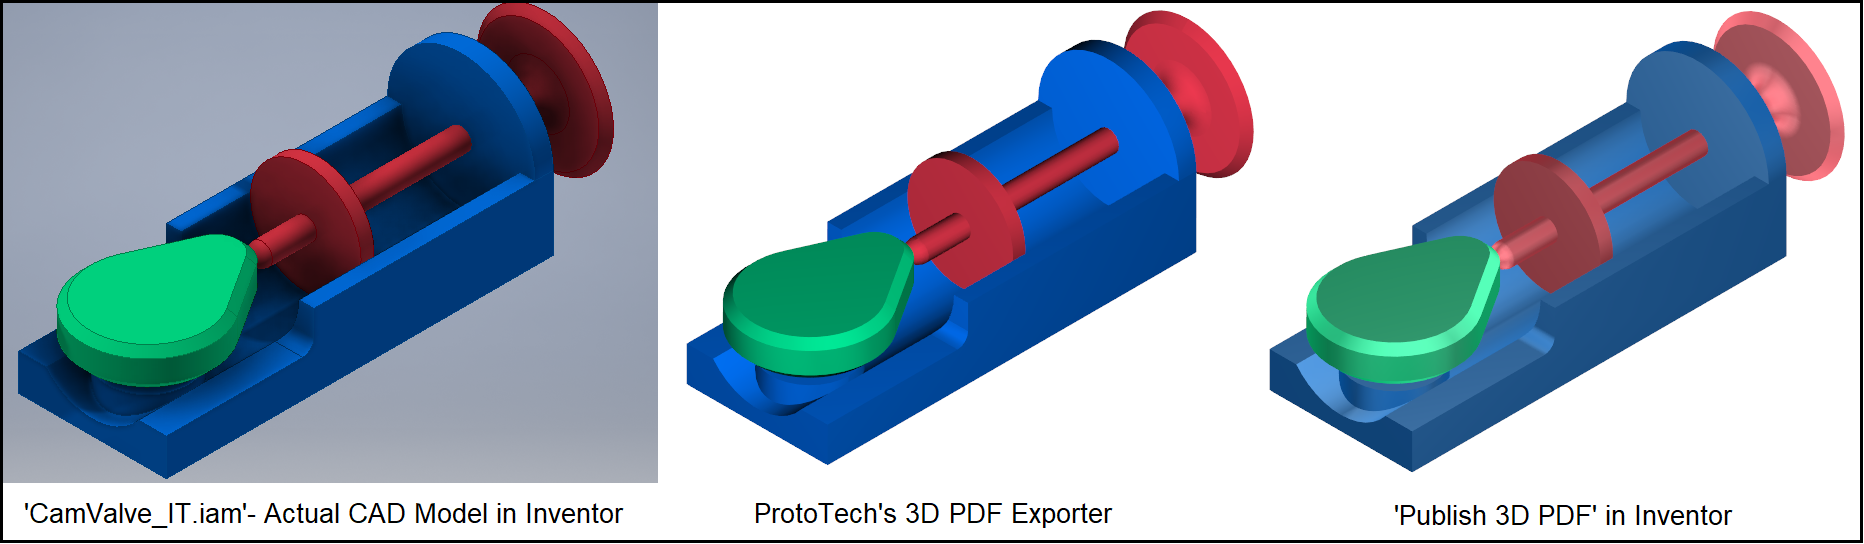 prototech-s-3d-pdf-exporter-vs-publish-3d-pdf-in-inventor-blog